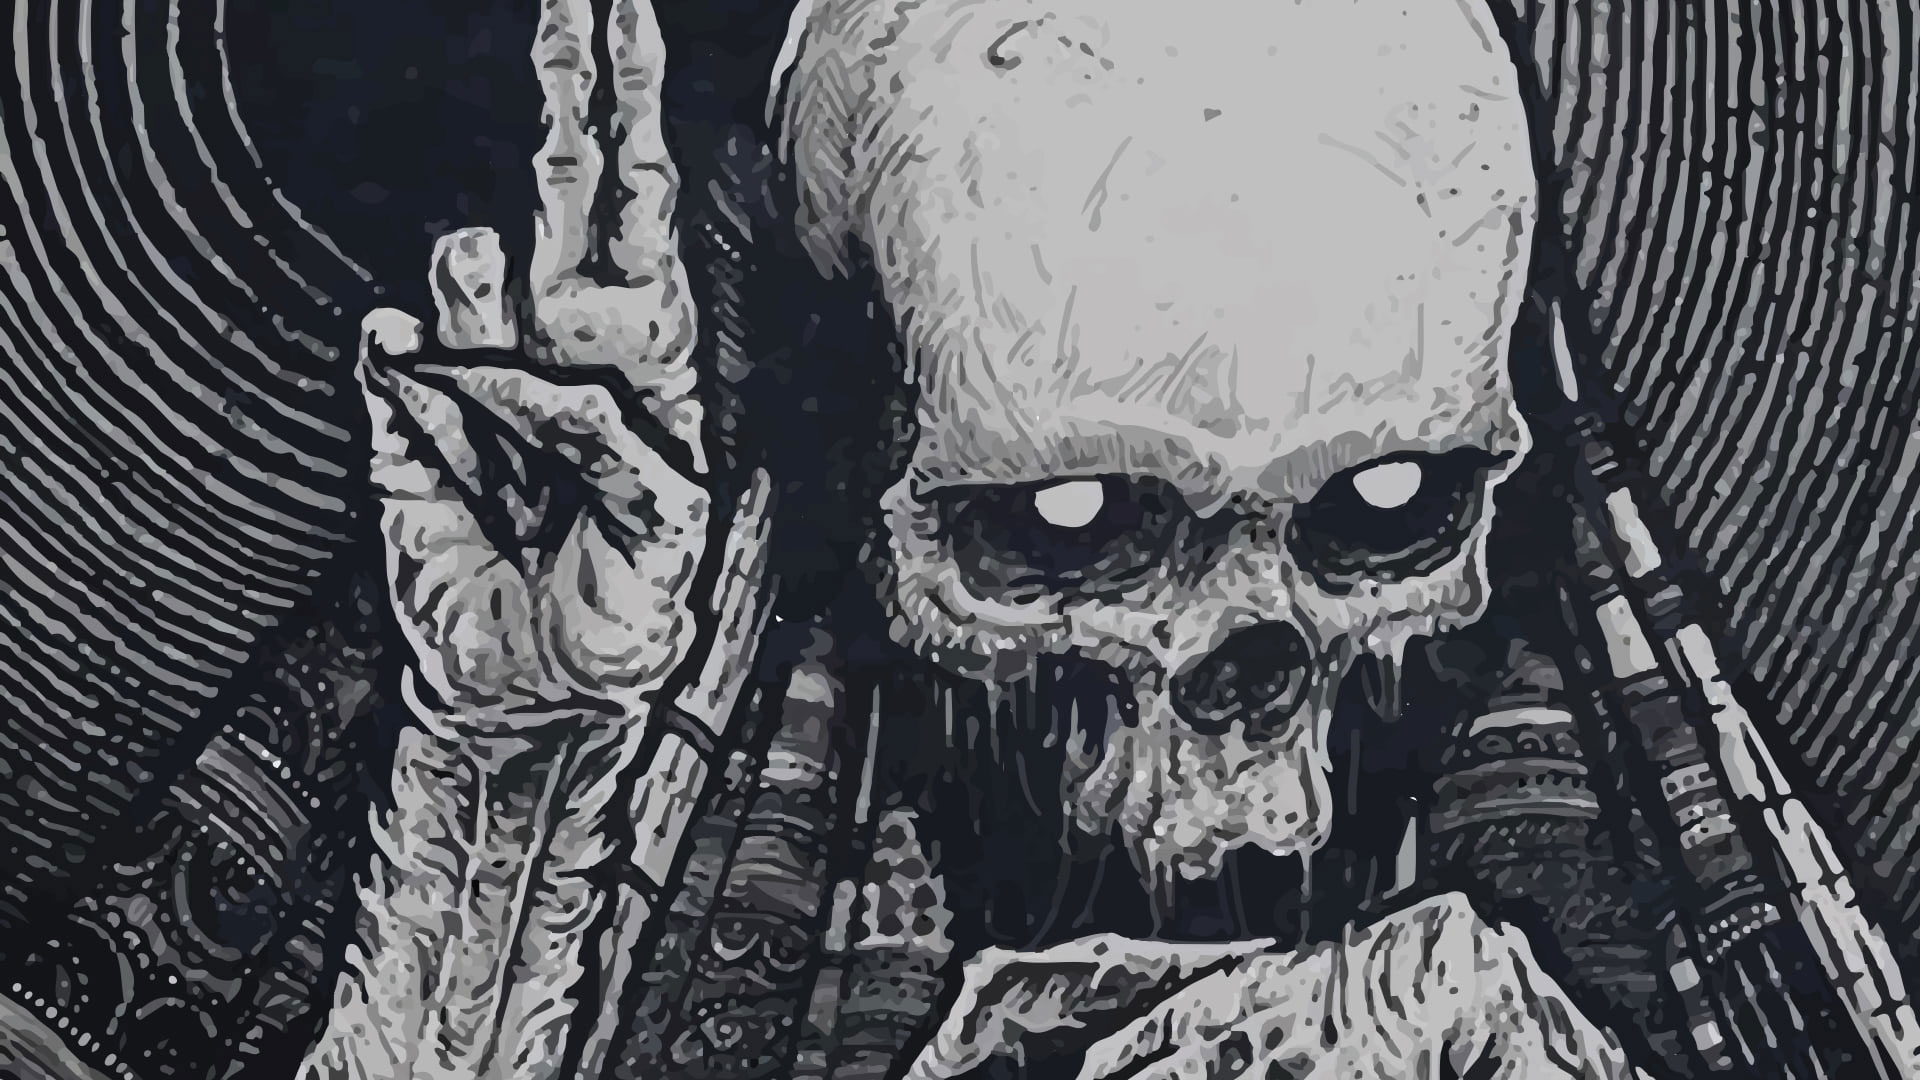 Skeleton illustration wallpaper, gray skeleton illustration, death, skull